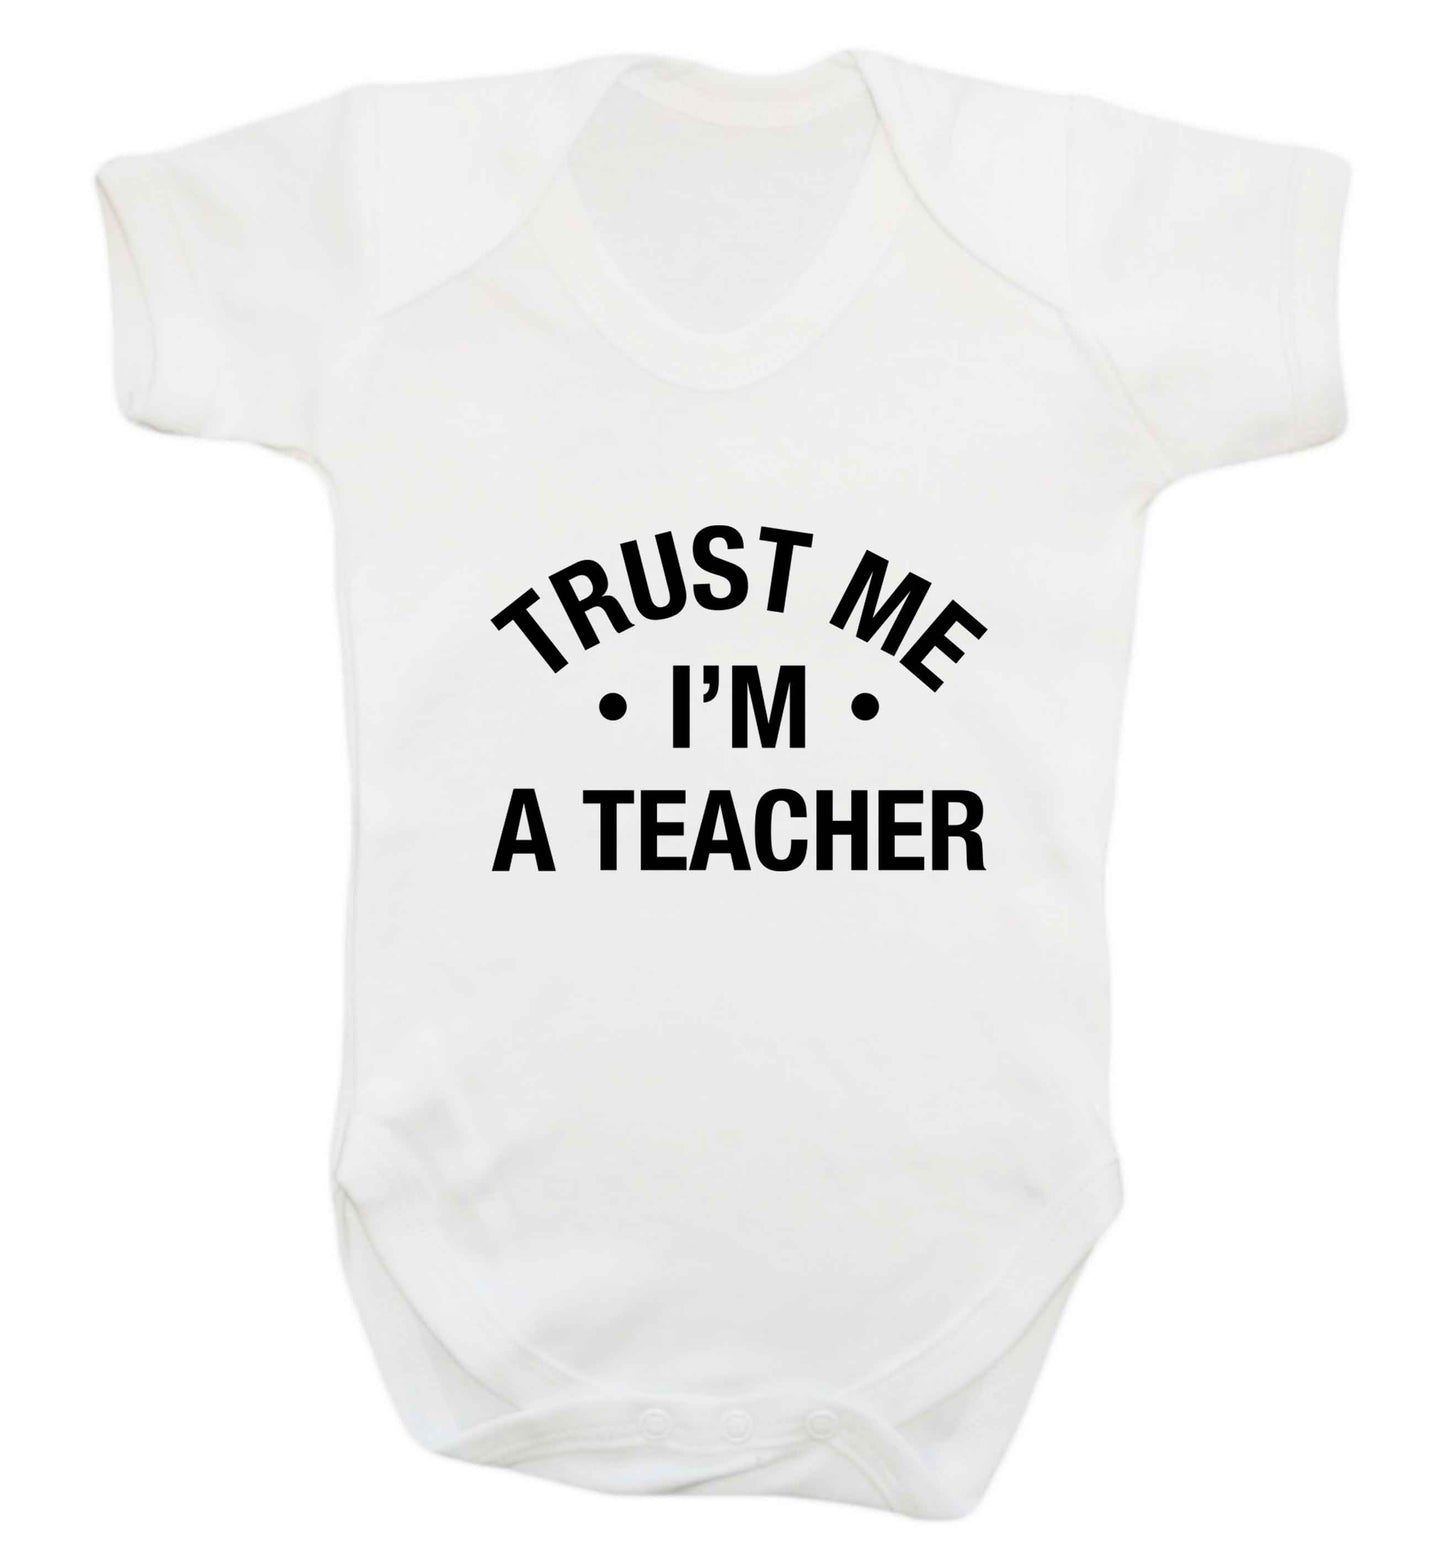 Trust me I'm a teacher baby vest white 18-24 months